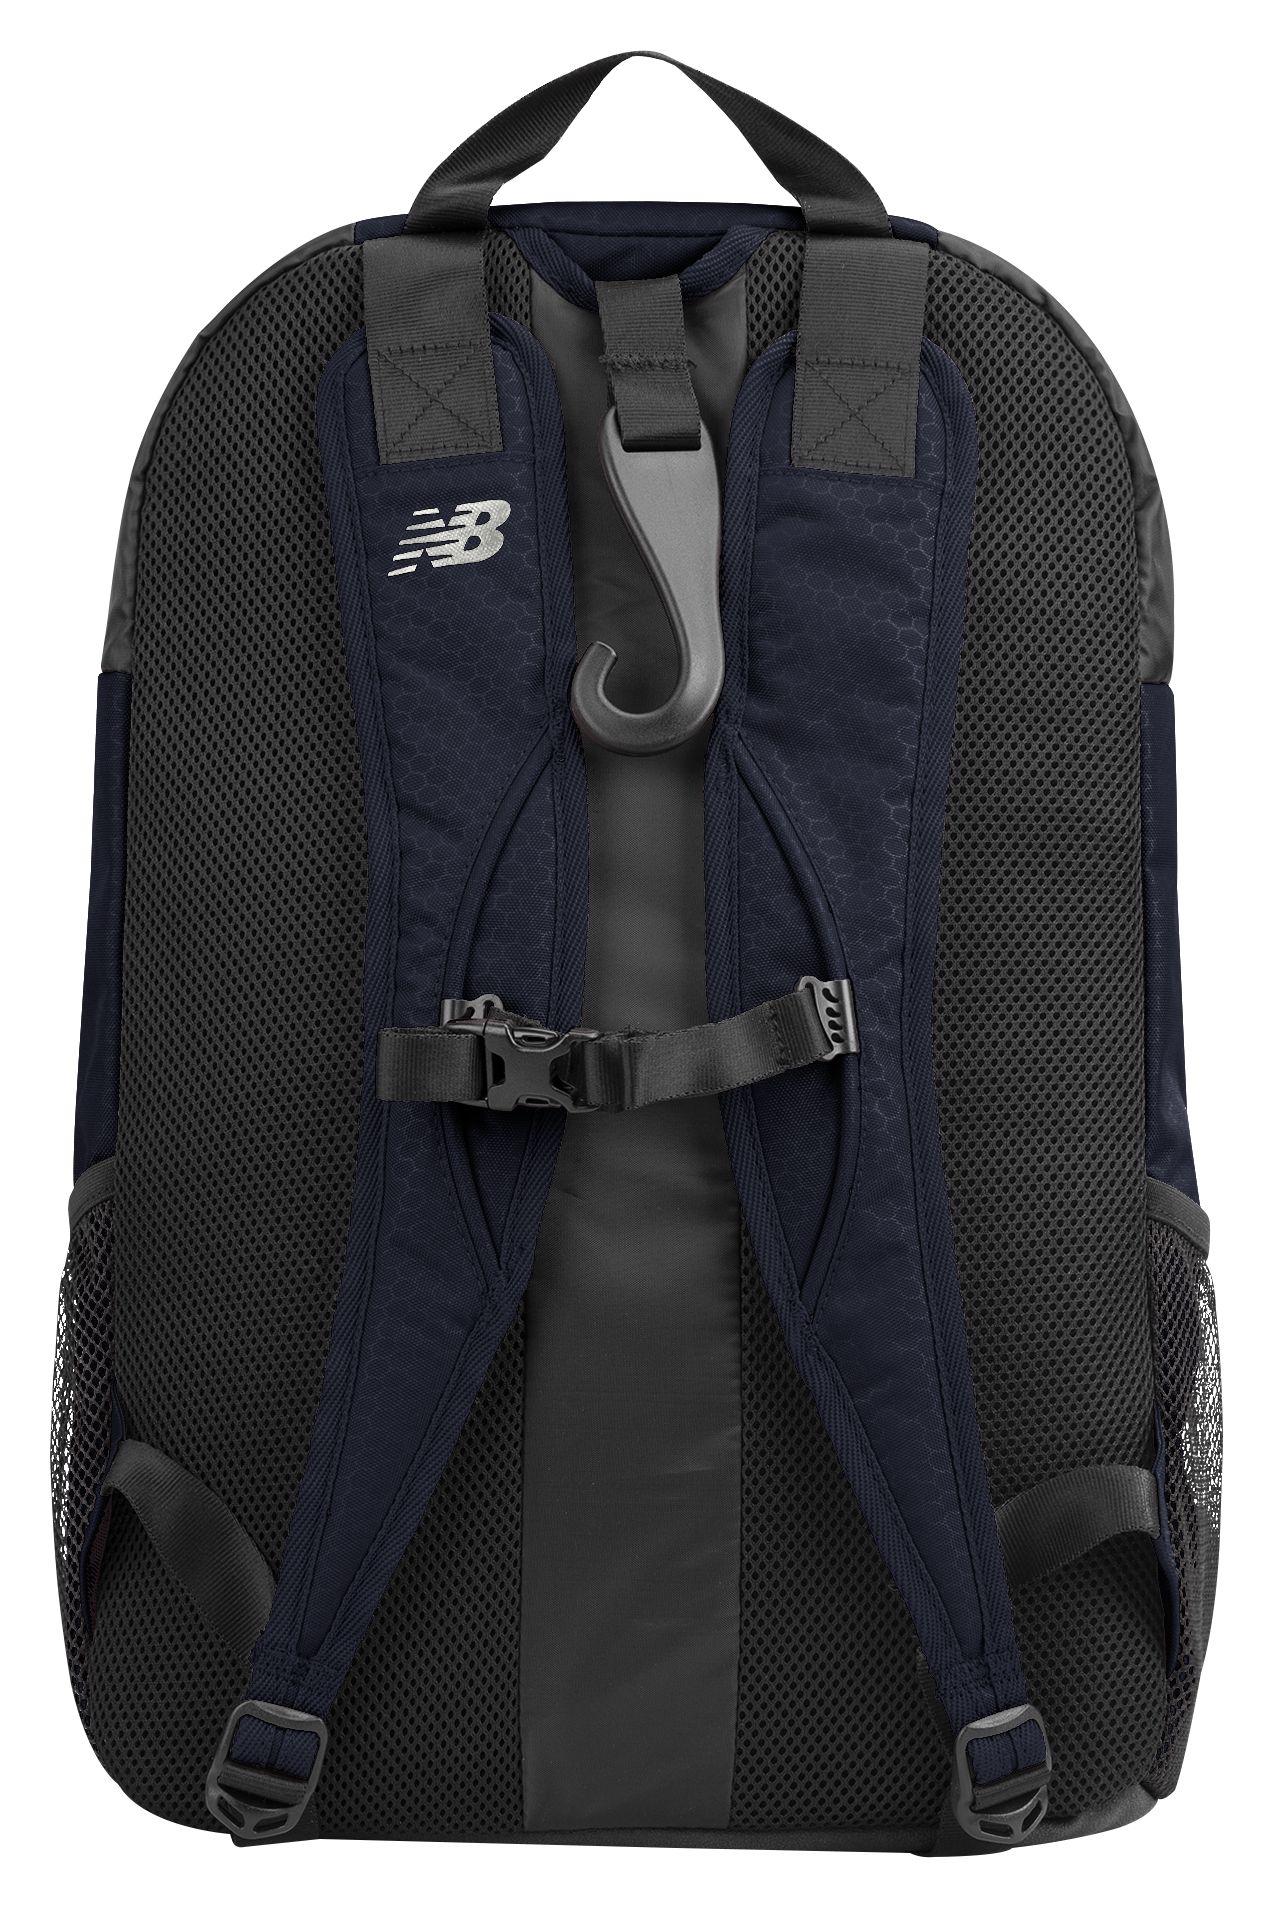 Bags \u0026 Backpacks - New Balance Team Sports